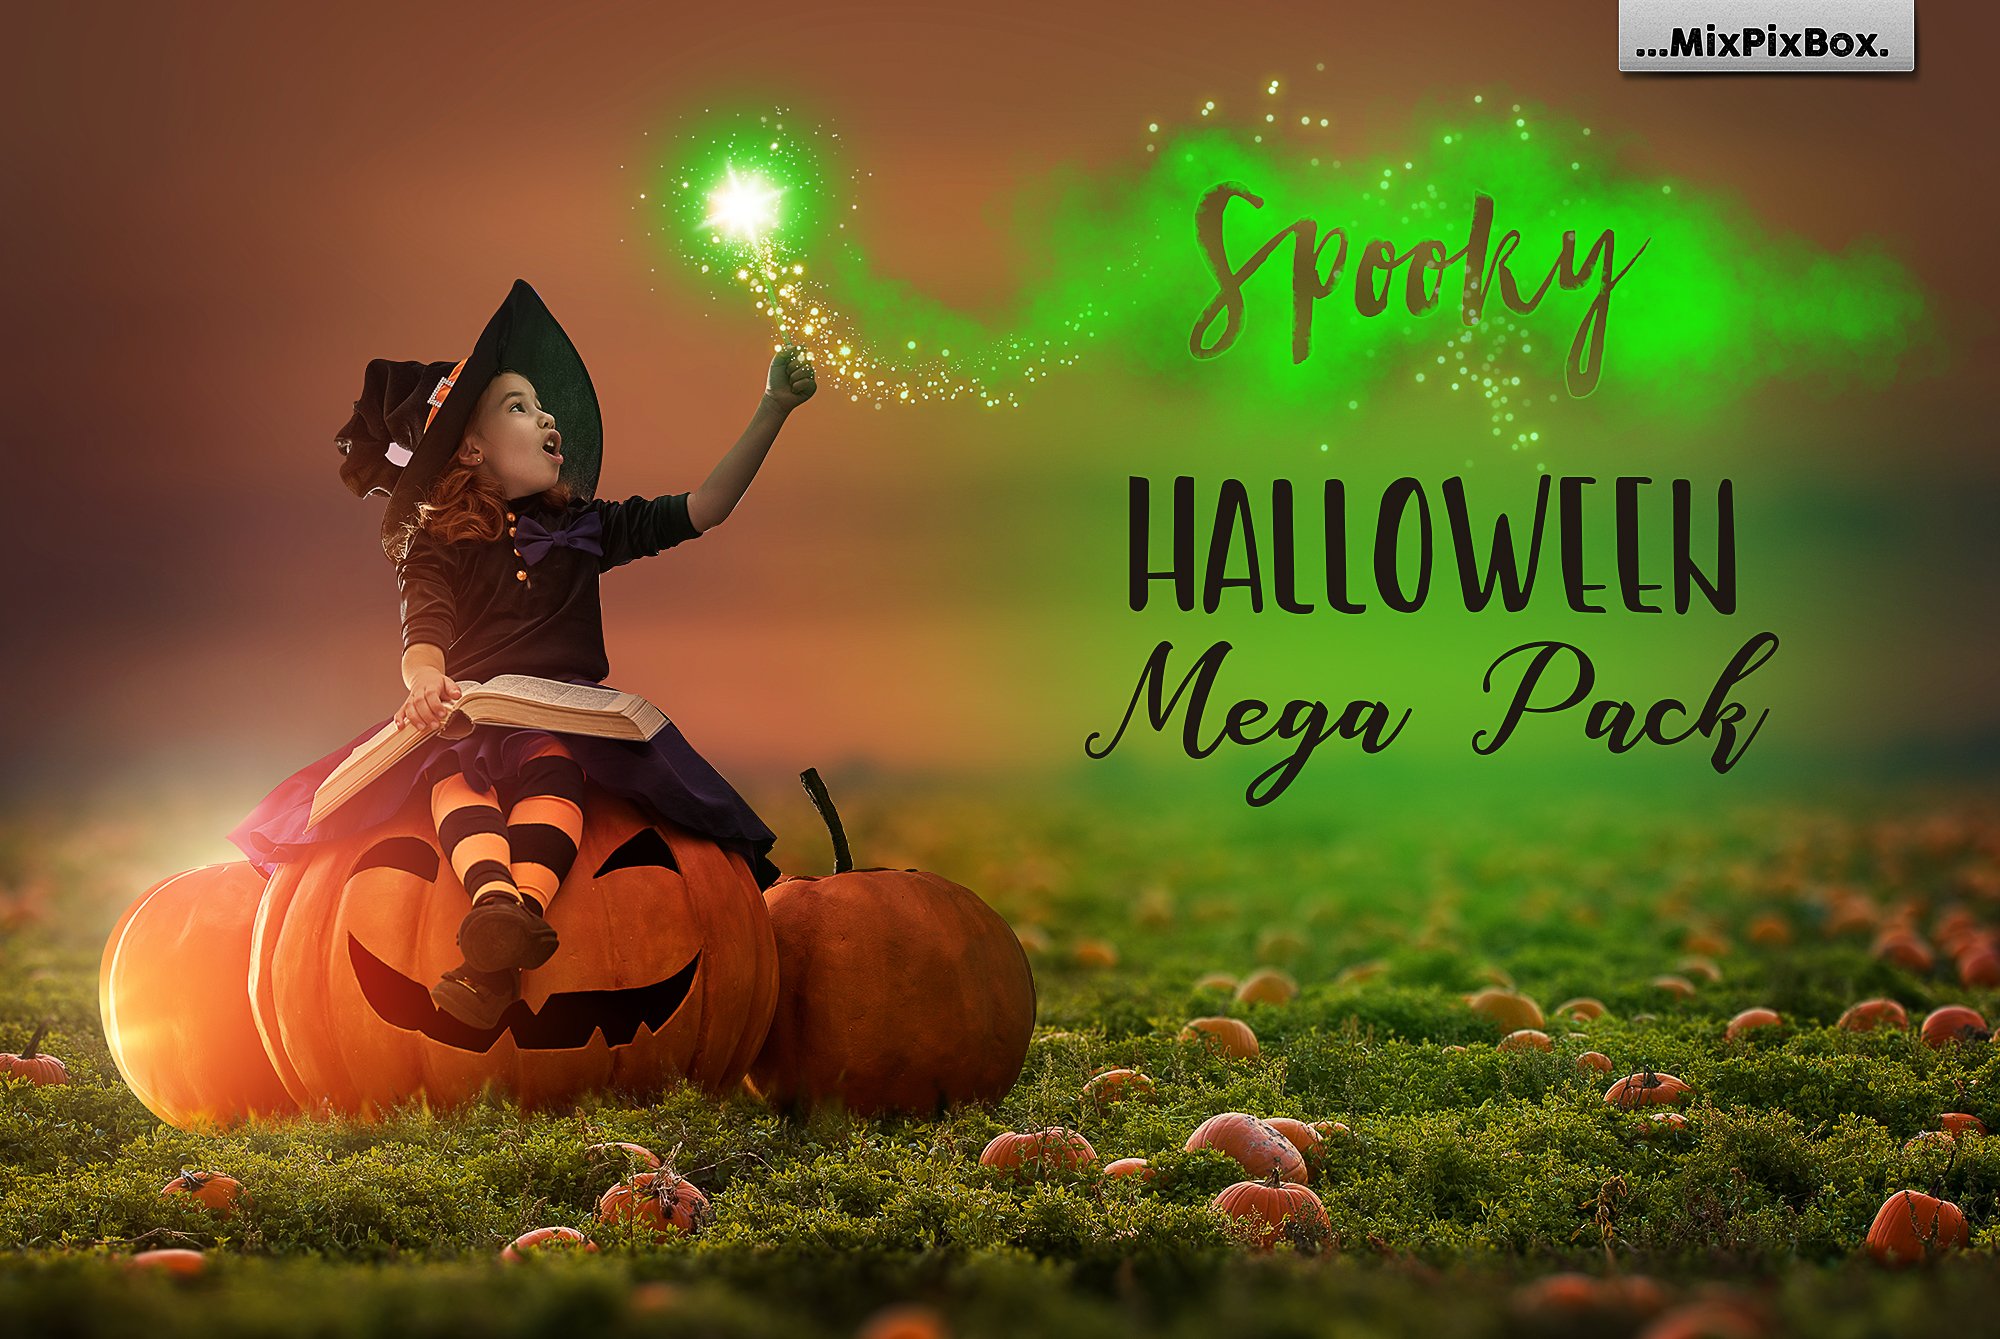 Halloween Mega Packcover image.